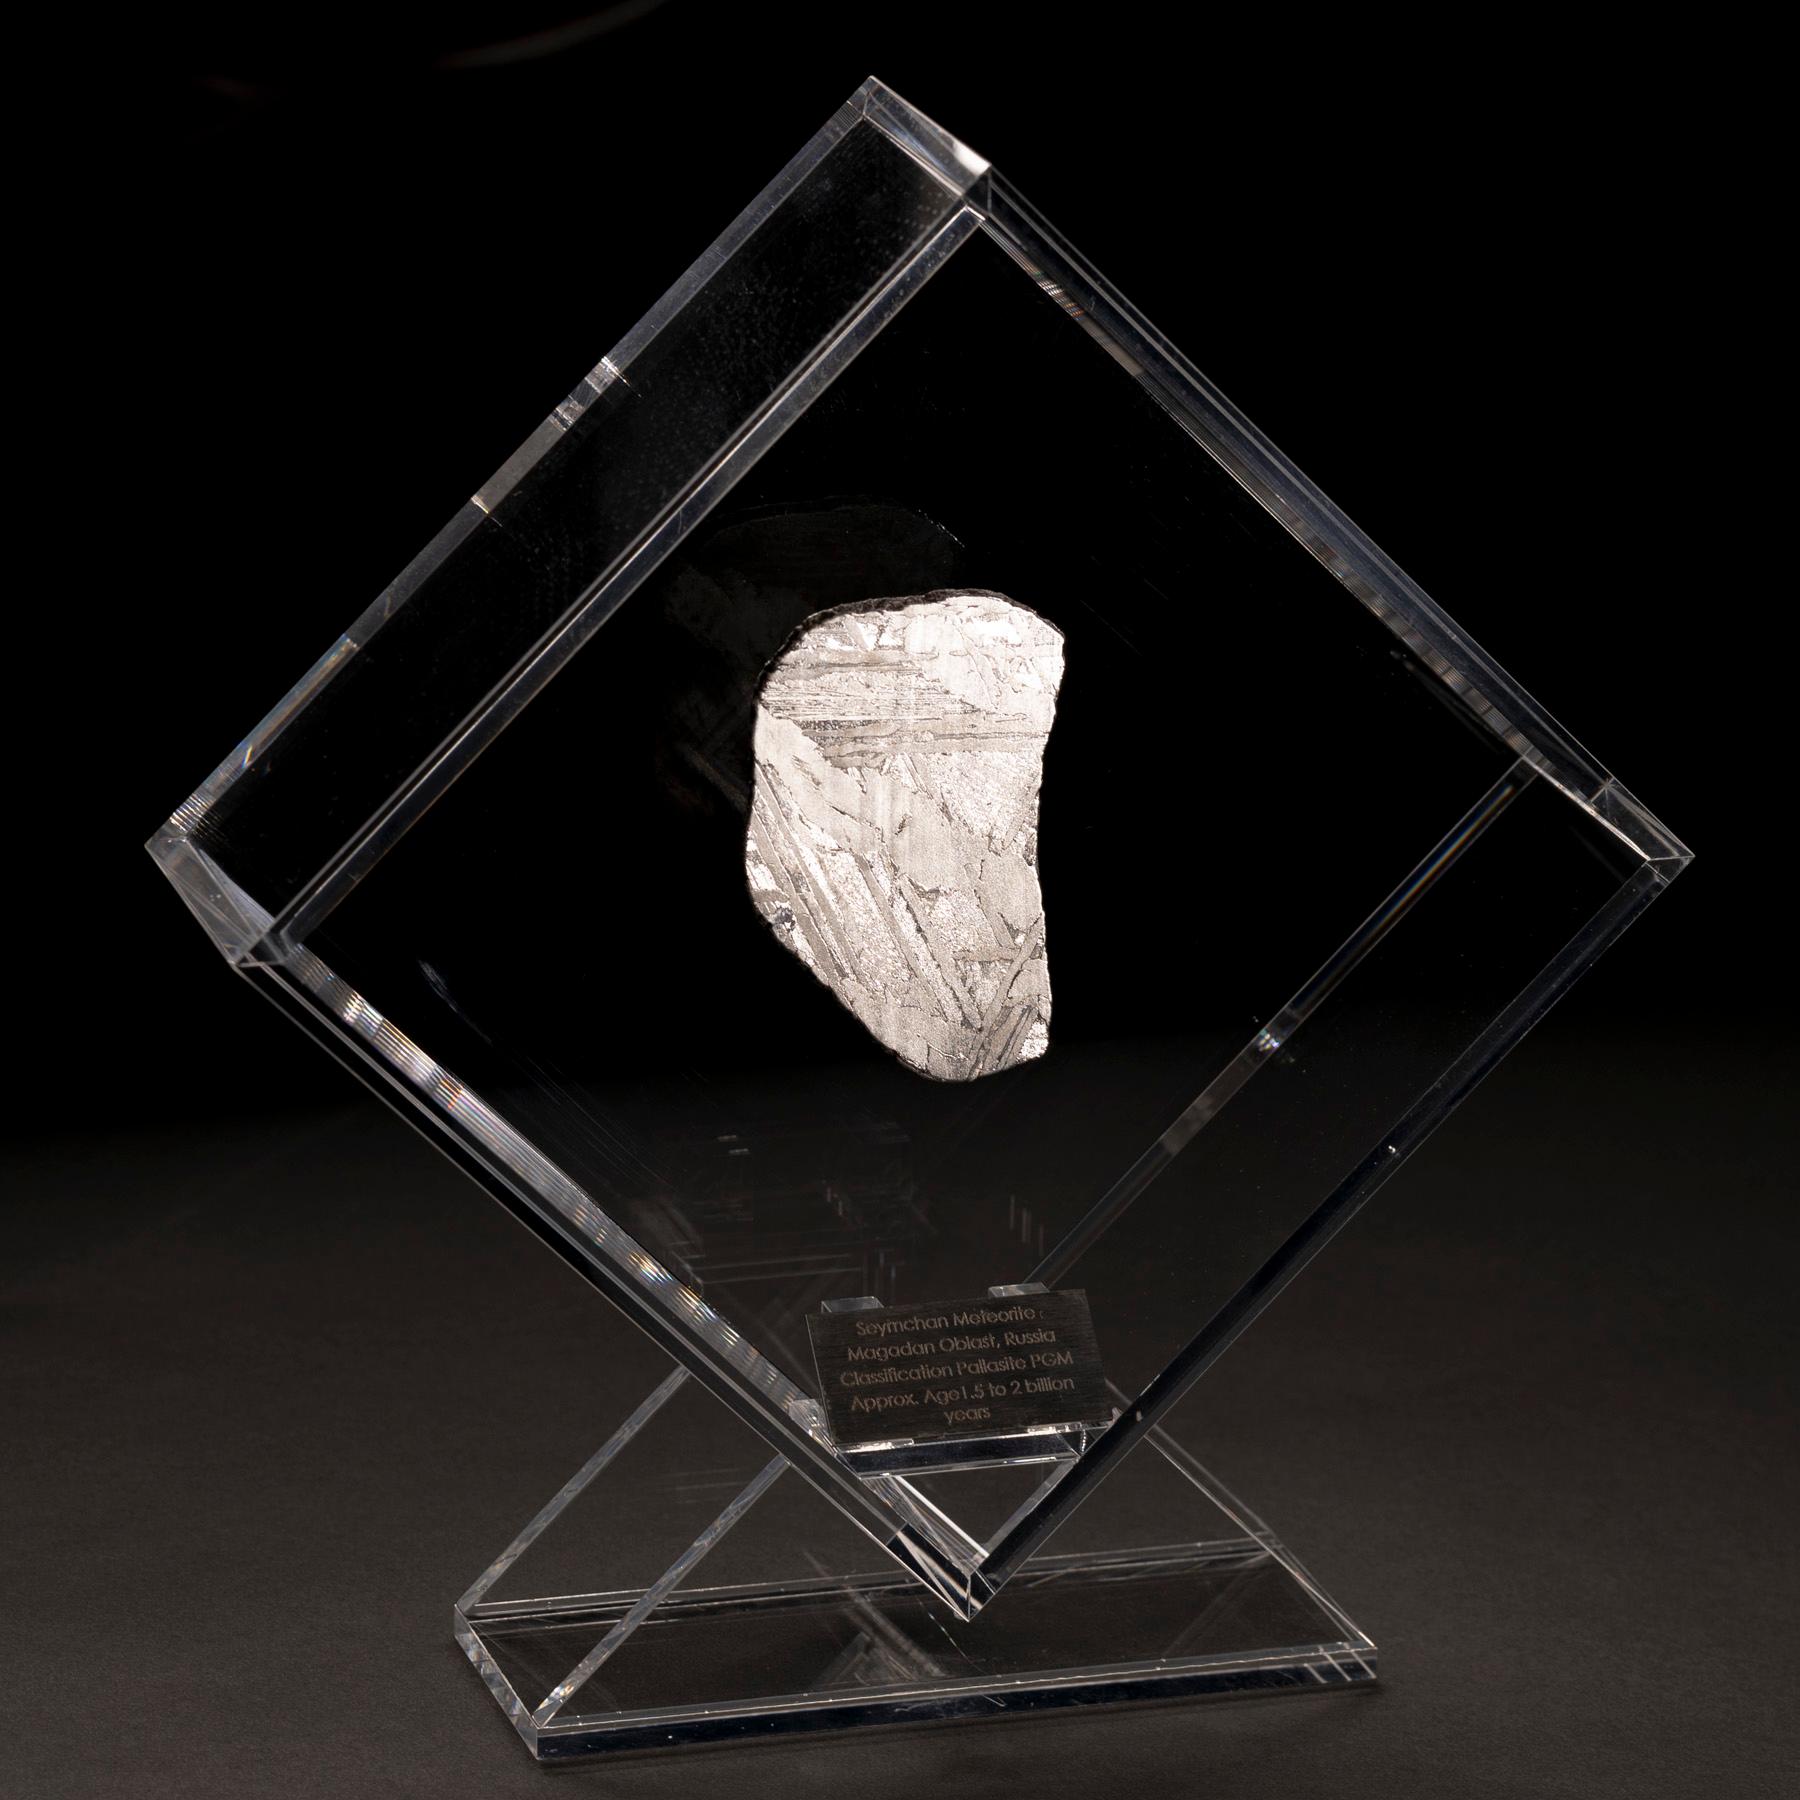 Original Design, Seymchan Meteorite in a Acrylic Display 1